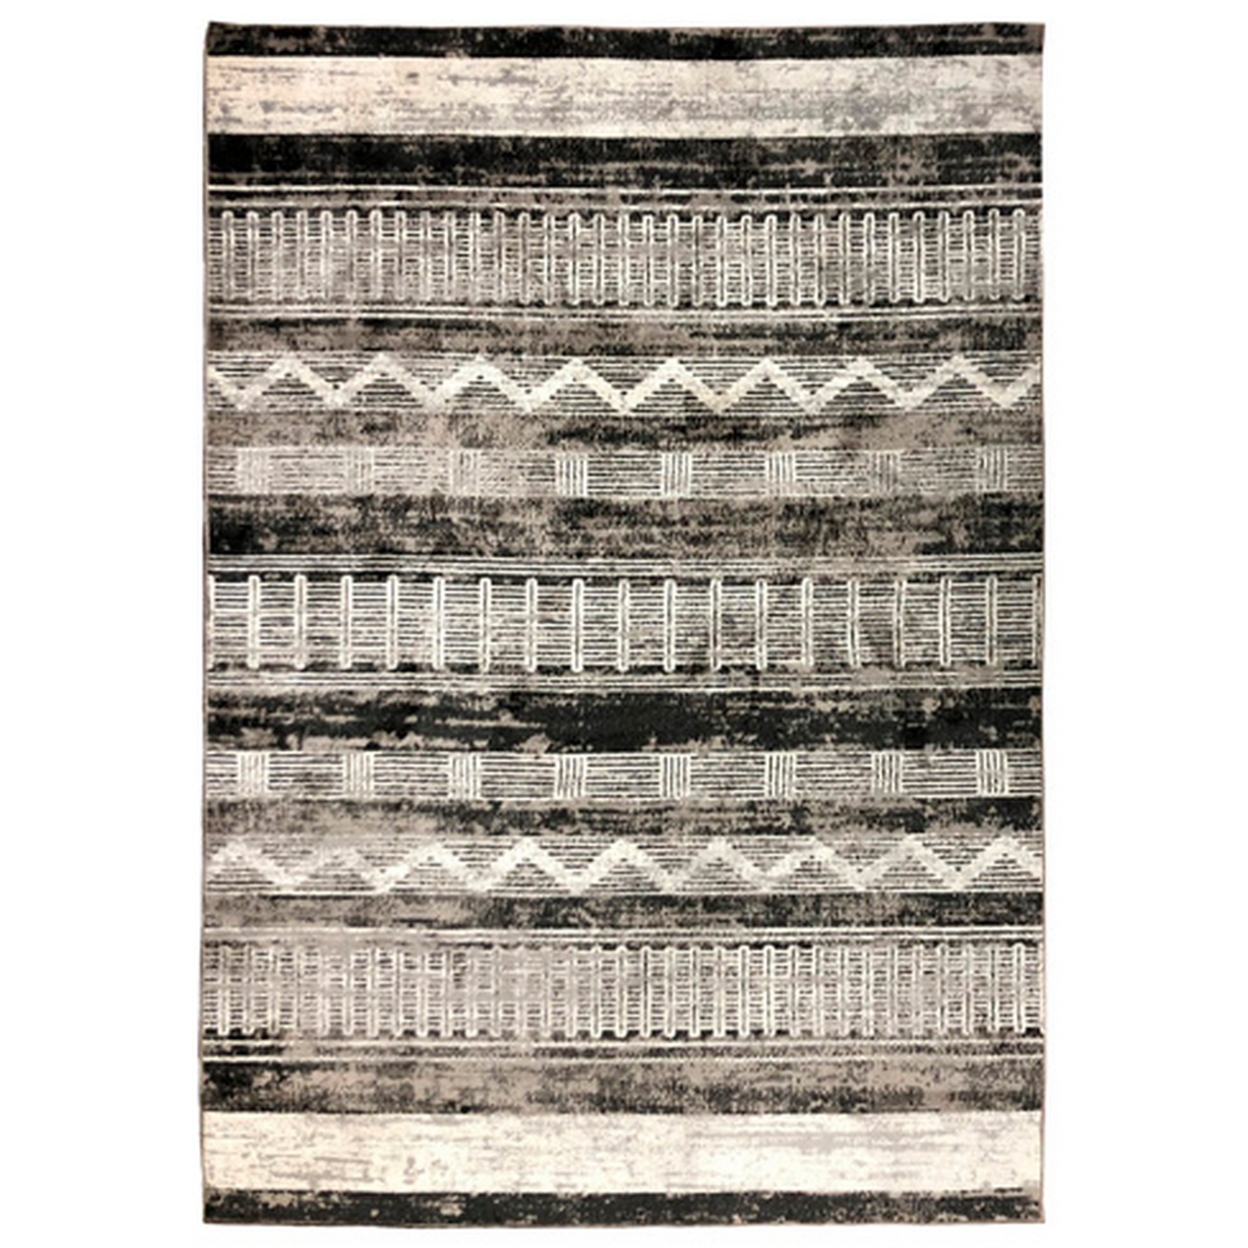 Chia 5 X 7 Area Rug, Woven Tribal Design, Cream And Black Polyester Fabric- Saltoro Sherpi